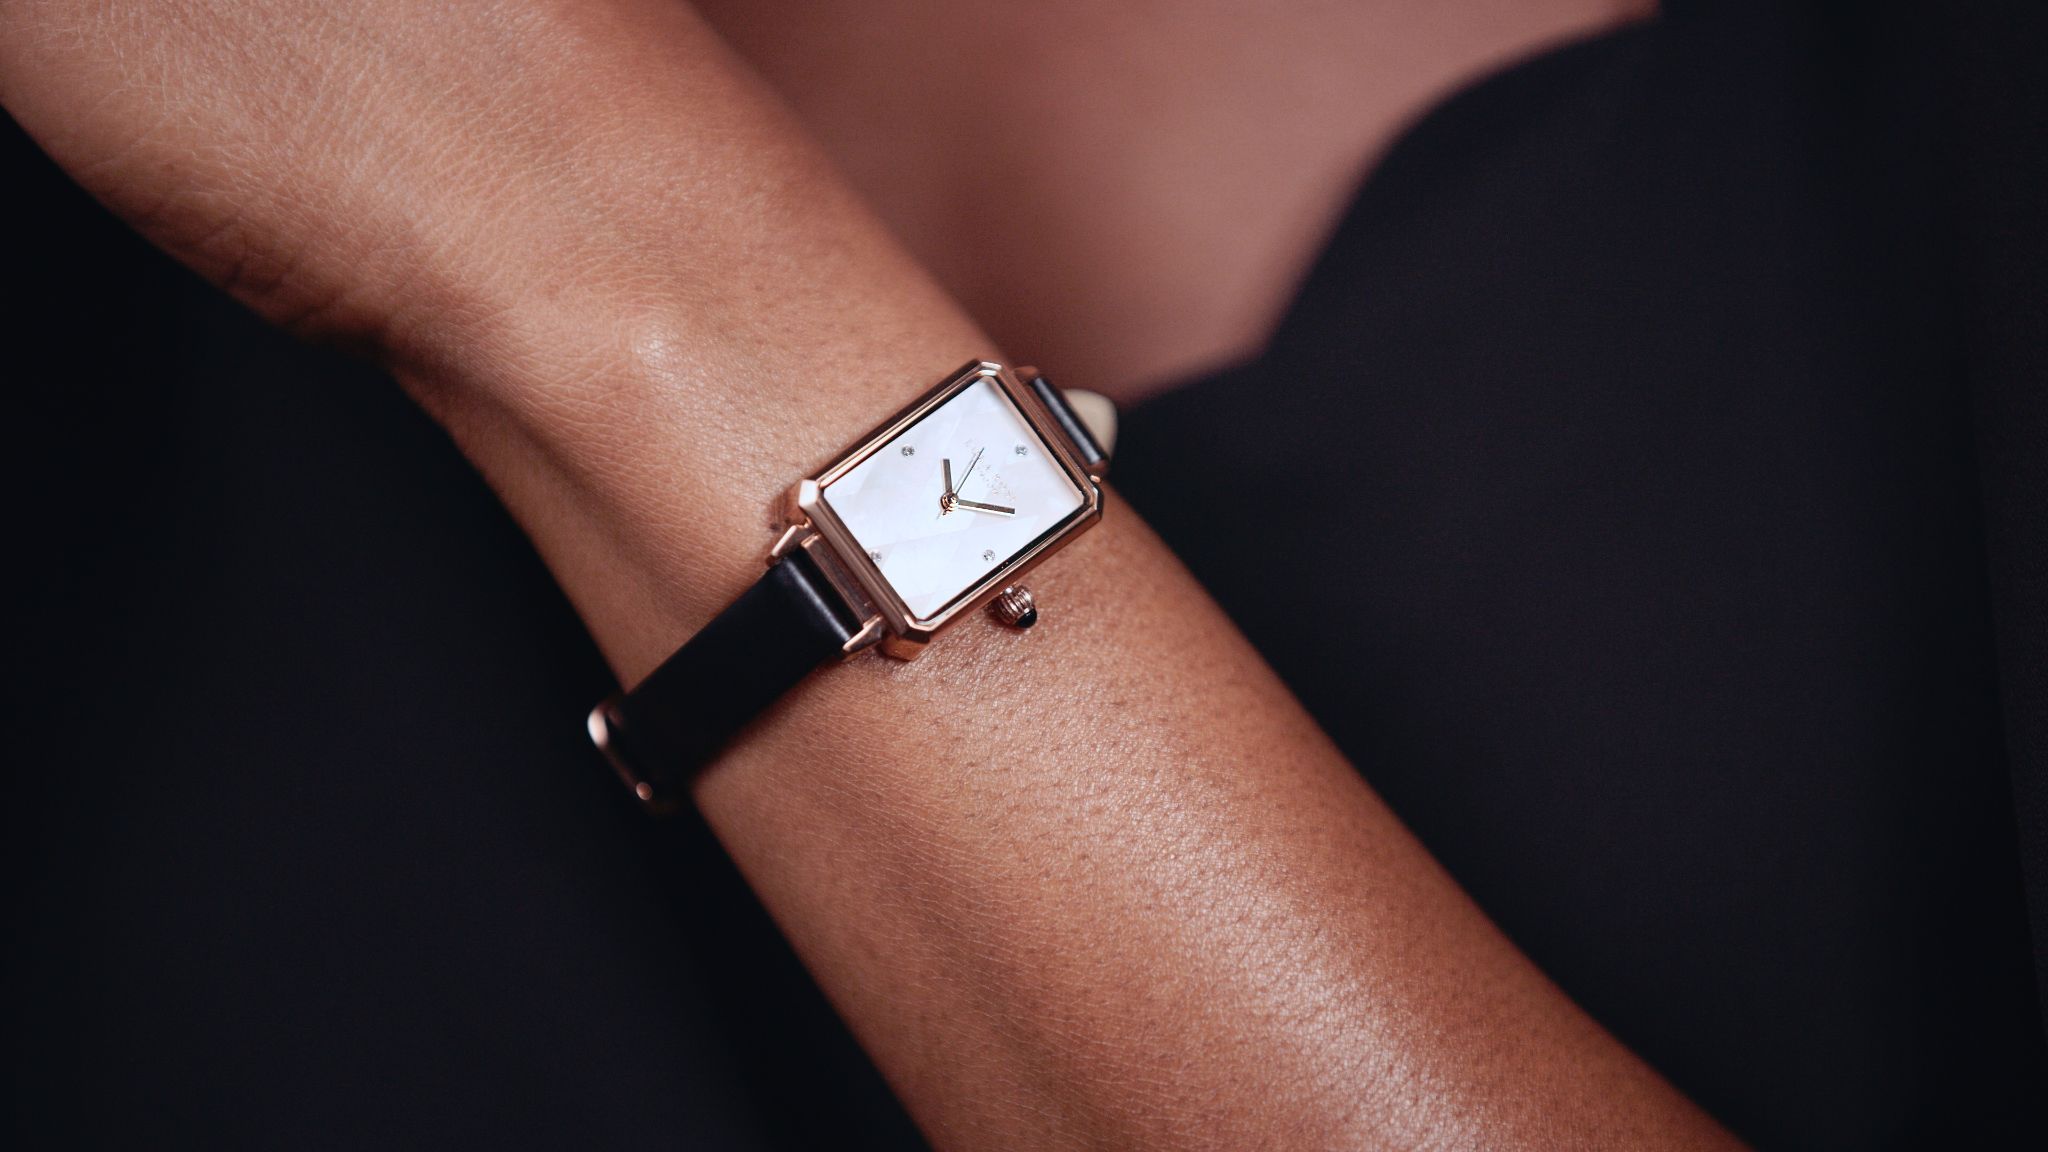 IU CI Studios Portfolio Lola Rose Lifestyle Products 60 second Ad Still Closeup of watch on a female arm